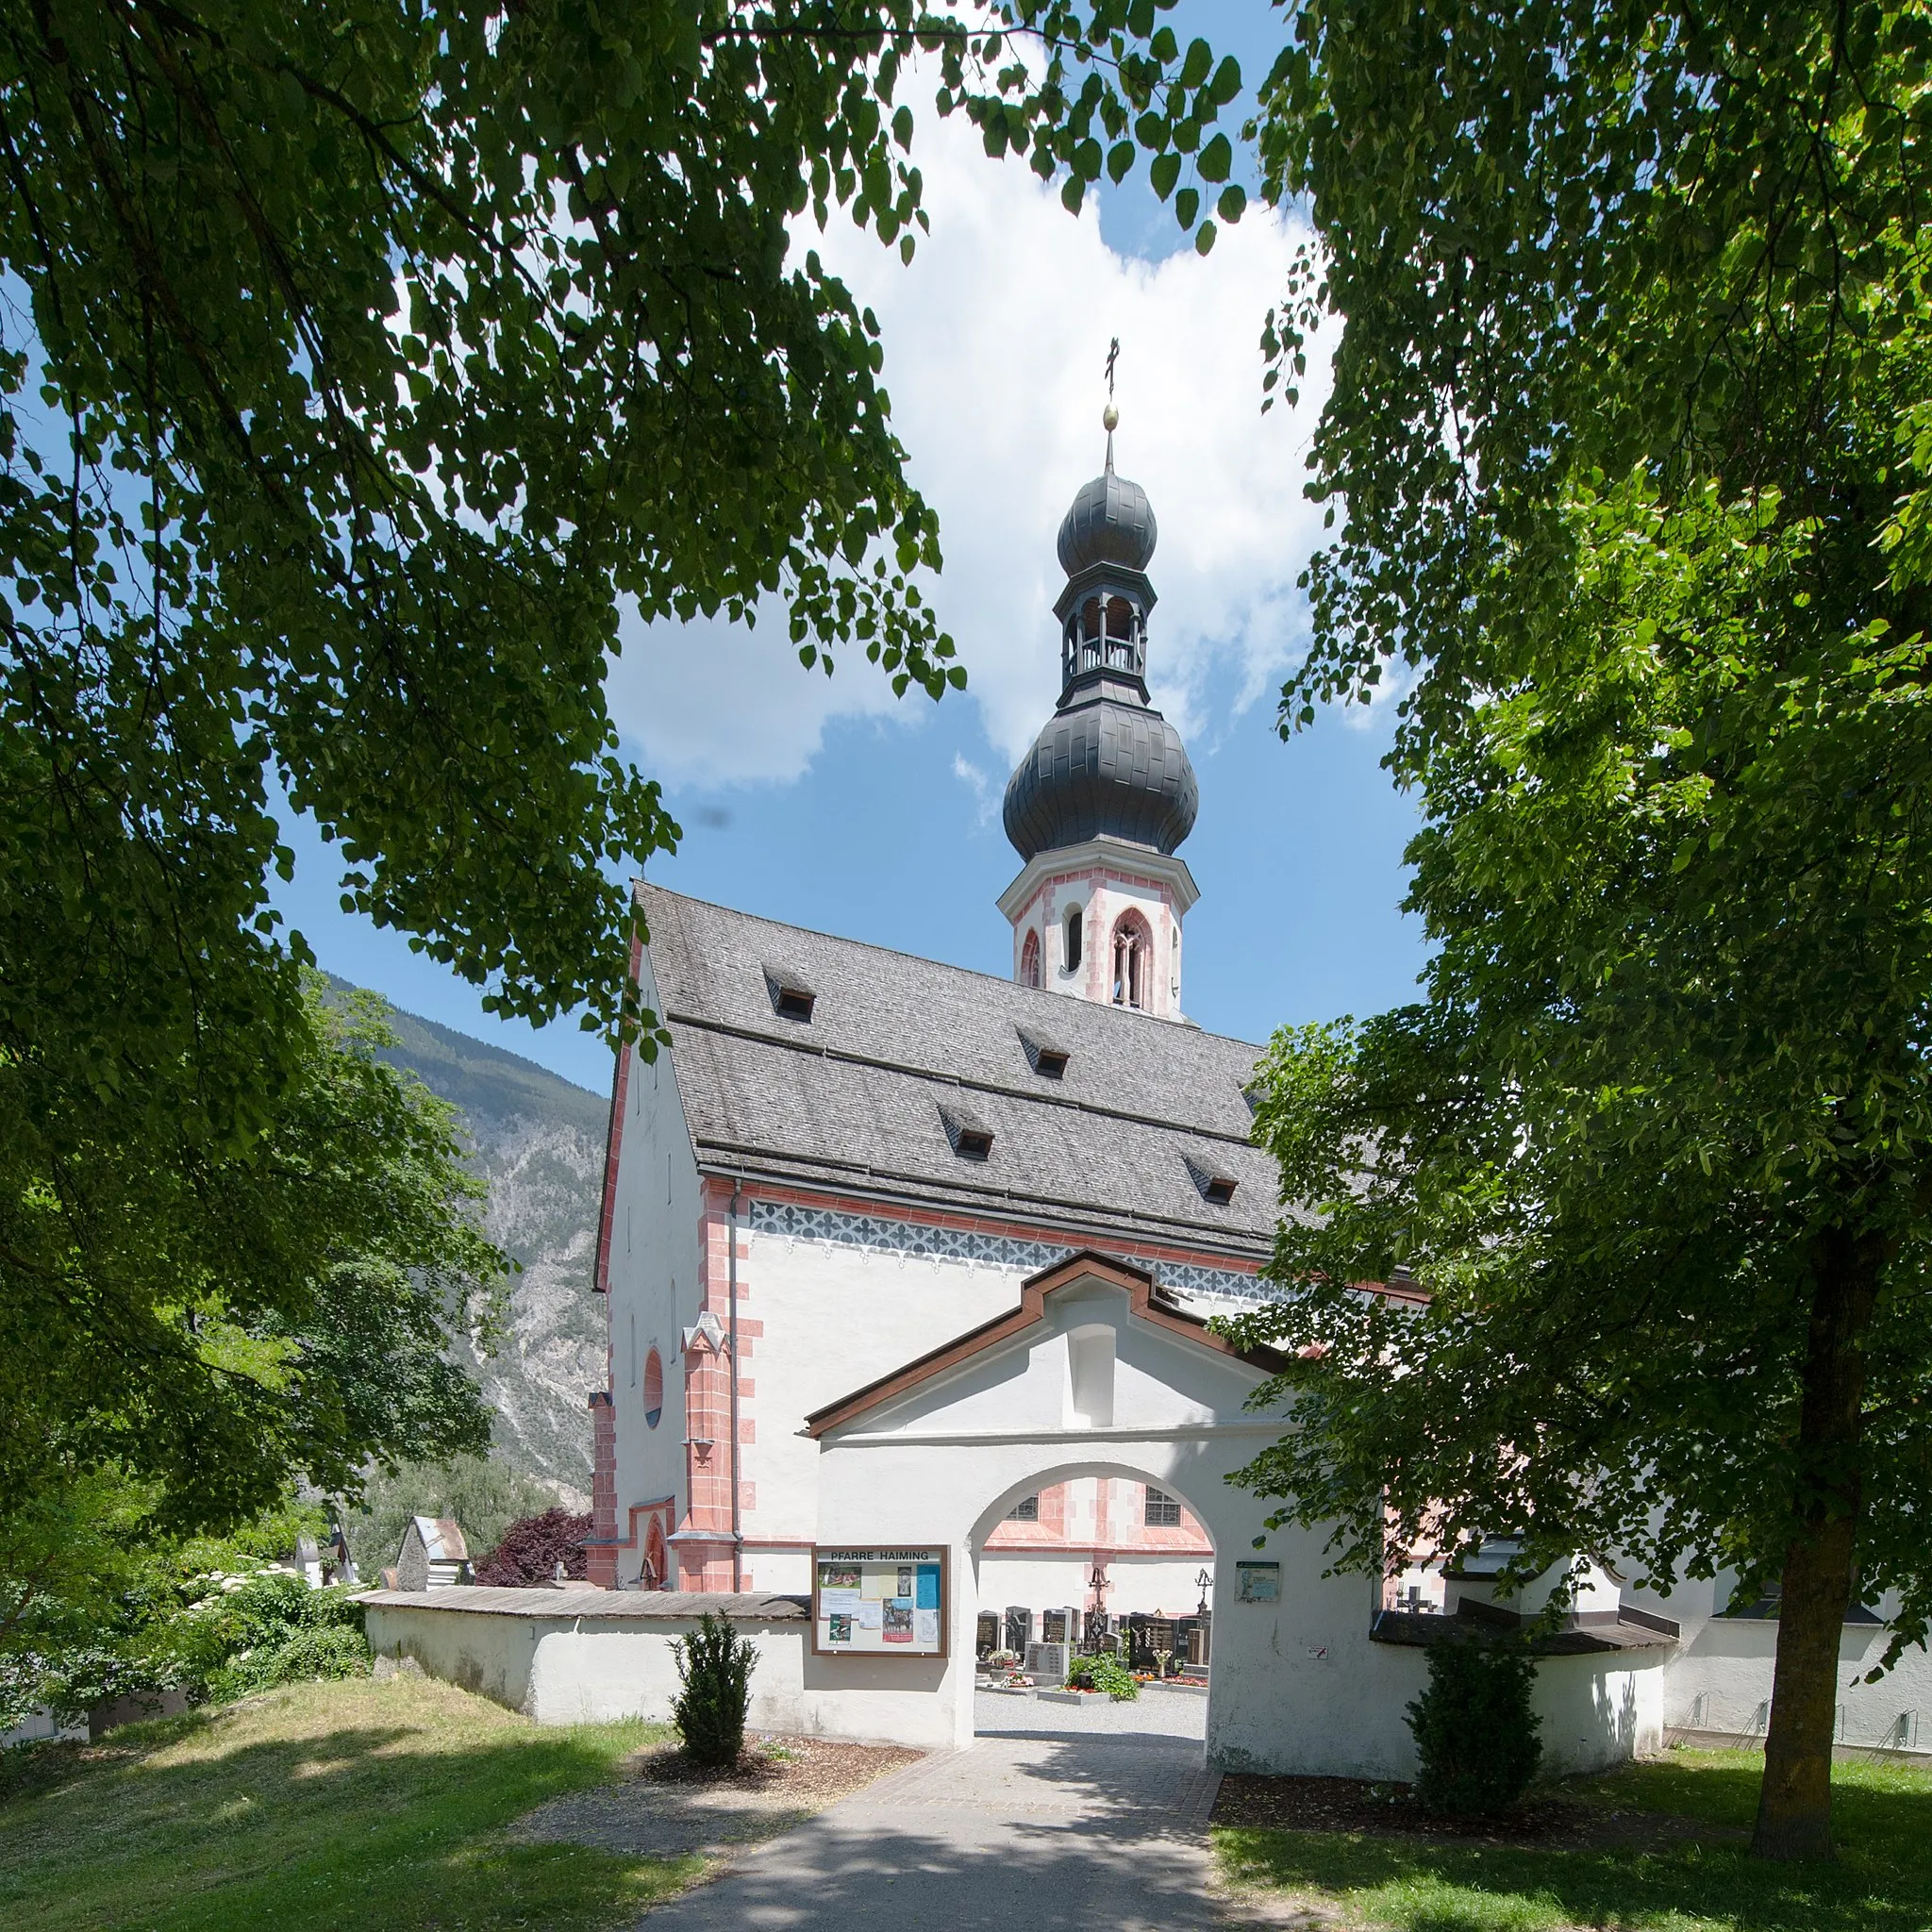 Afbeelding van Tirol